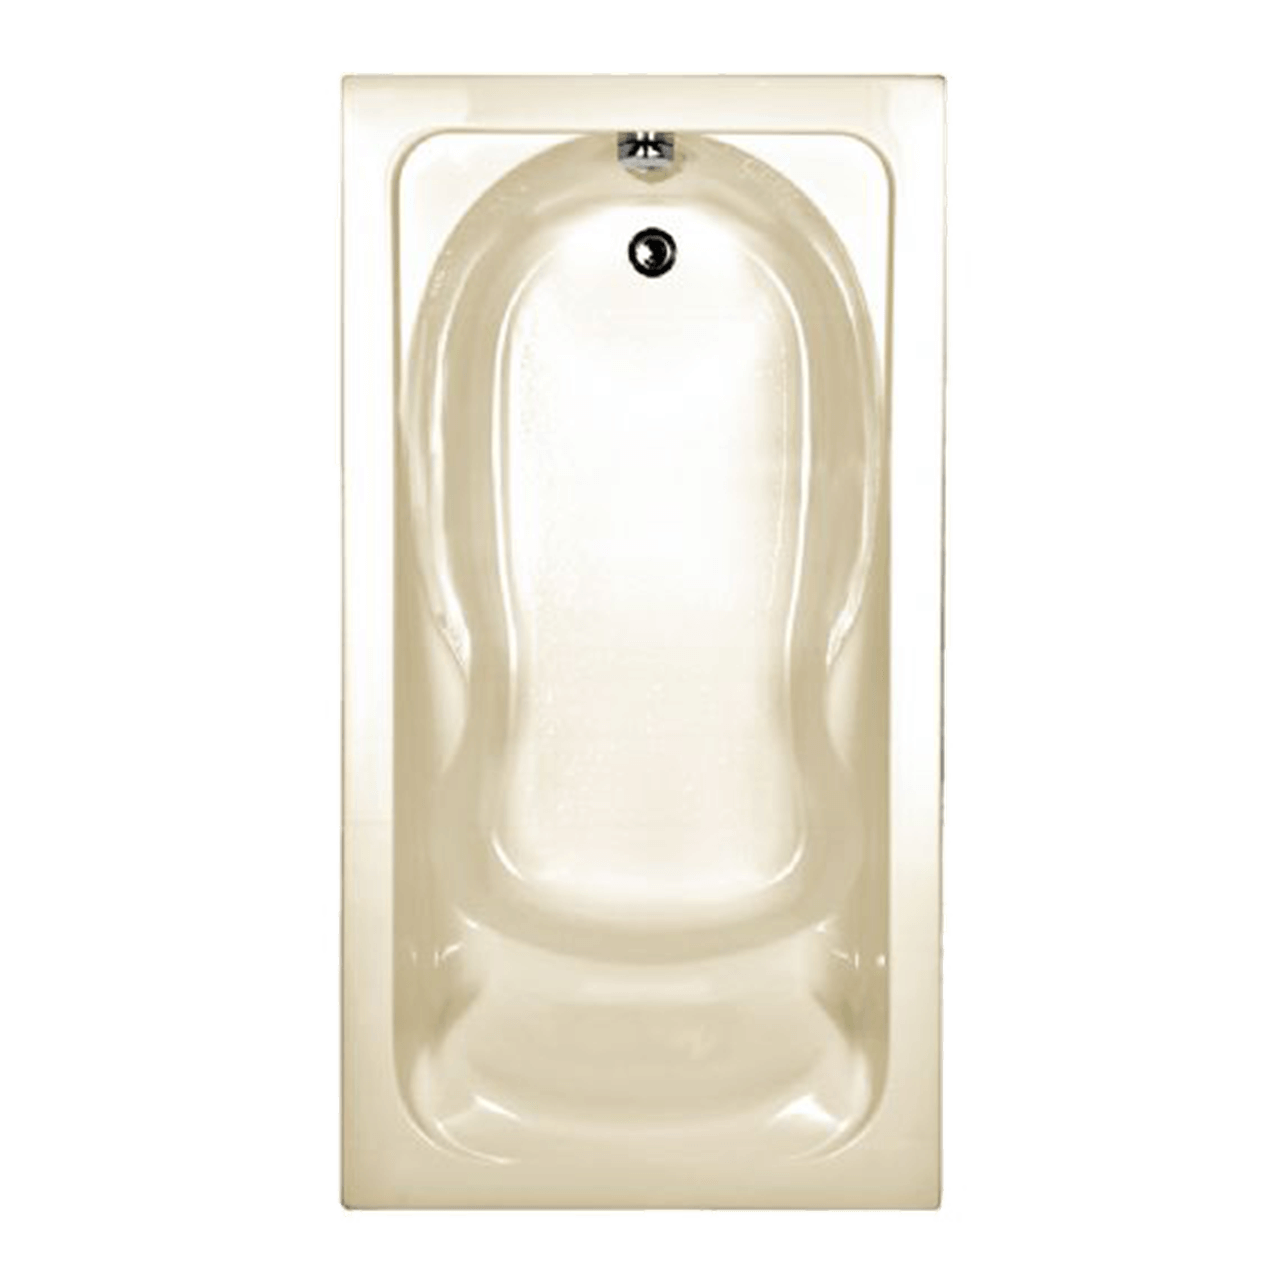 Bathroom Hot Standard Plumbing American Brands Tub Clipart